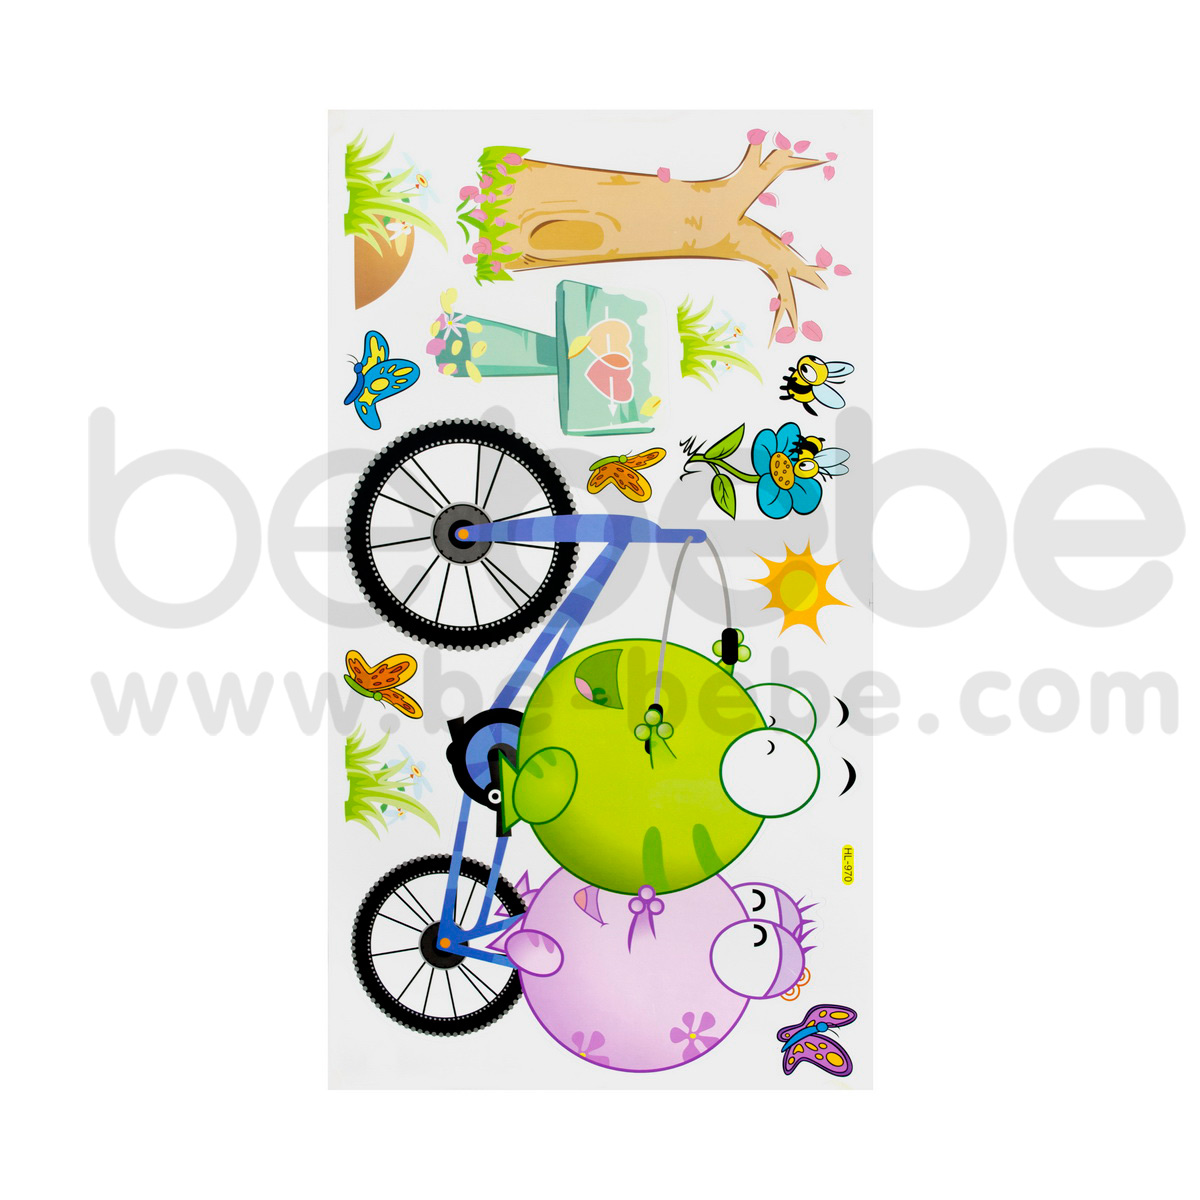 be bebe :Wall Sticker (33x60cm.) / HL-970 